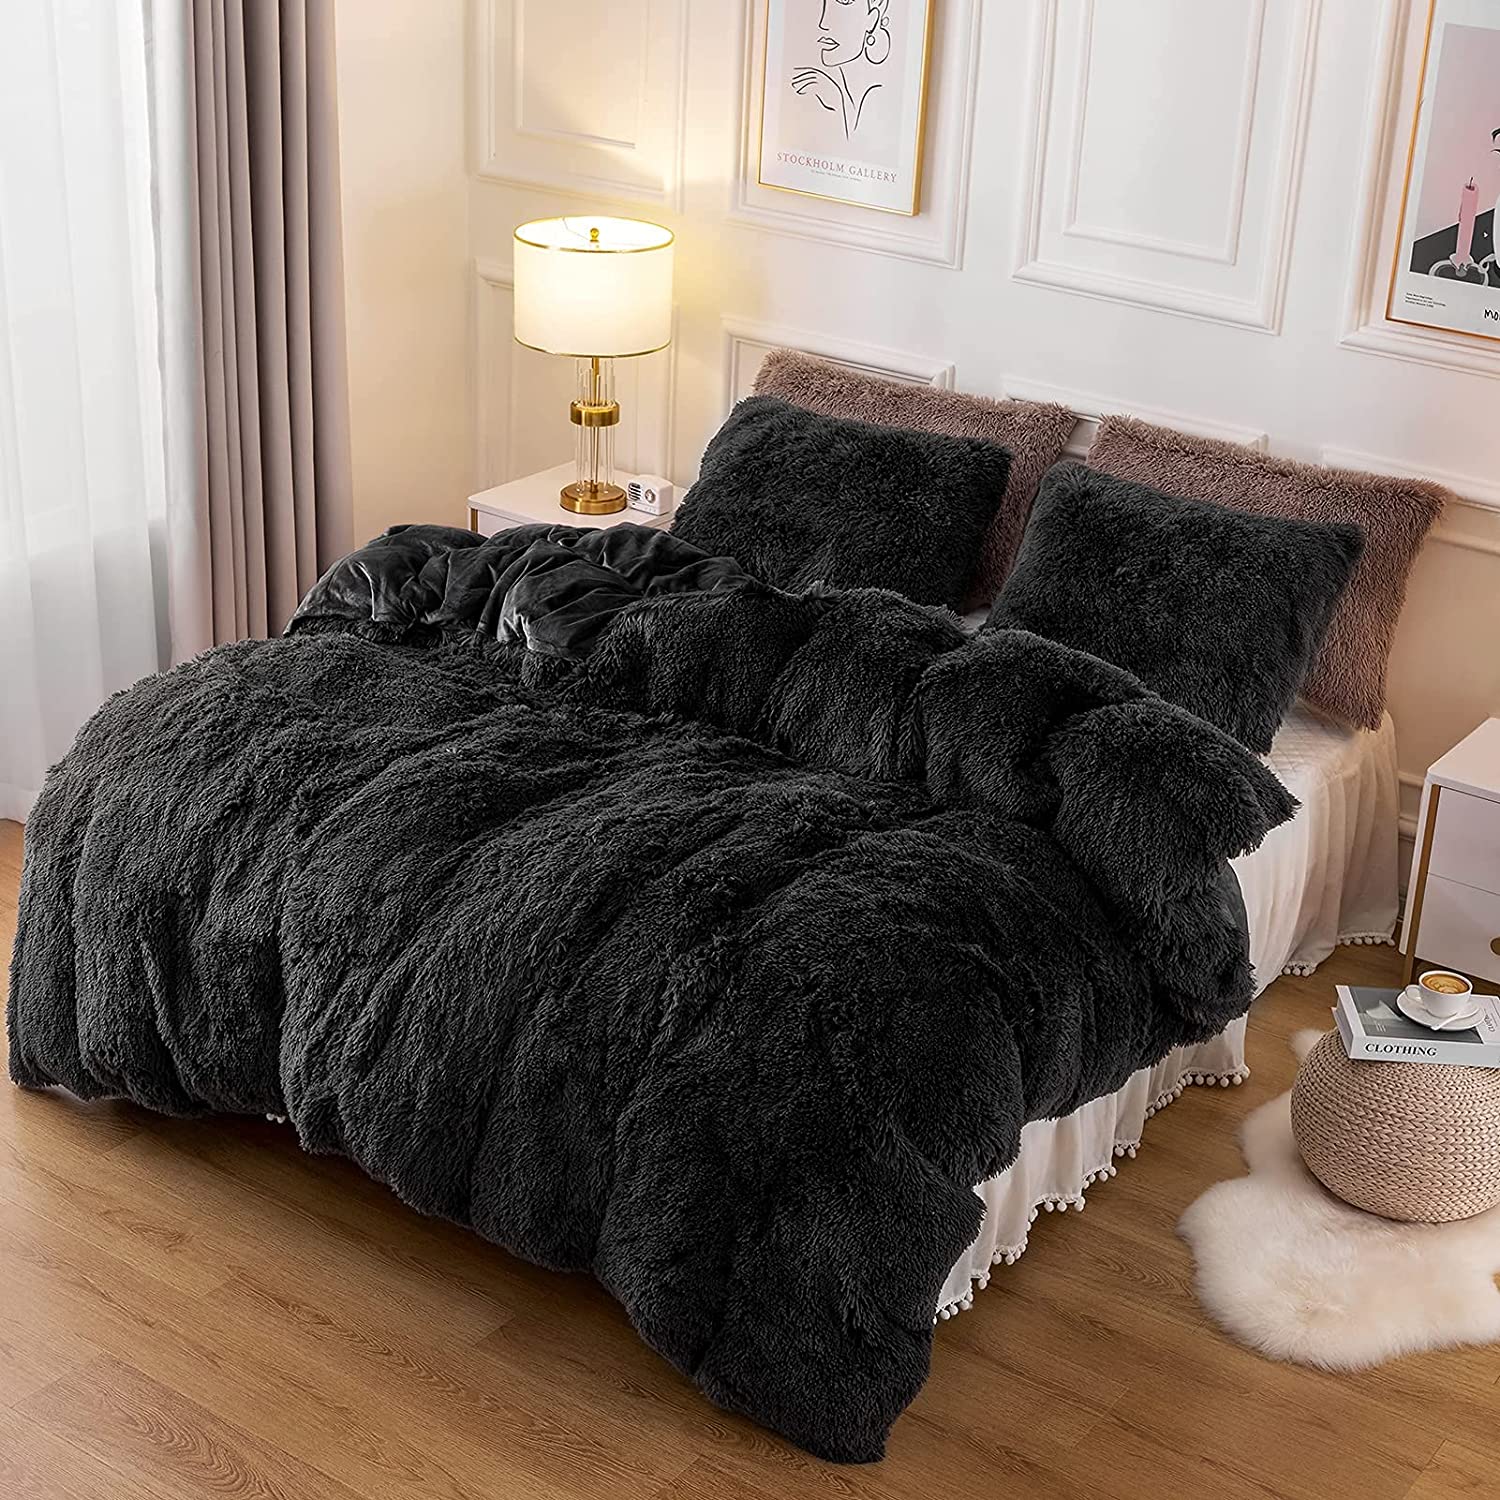 Price:$36.99  Fluffy Duvet Cover Oeko-TEX Certified Luxury Ultra Soft Shaggy Crystal Velvet Bedding 1 Piece Faux Fur Duvet Cover, Zipper Closure (King, Black) : Home & Kitchen